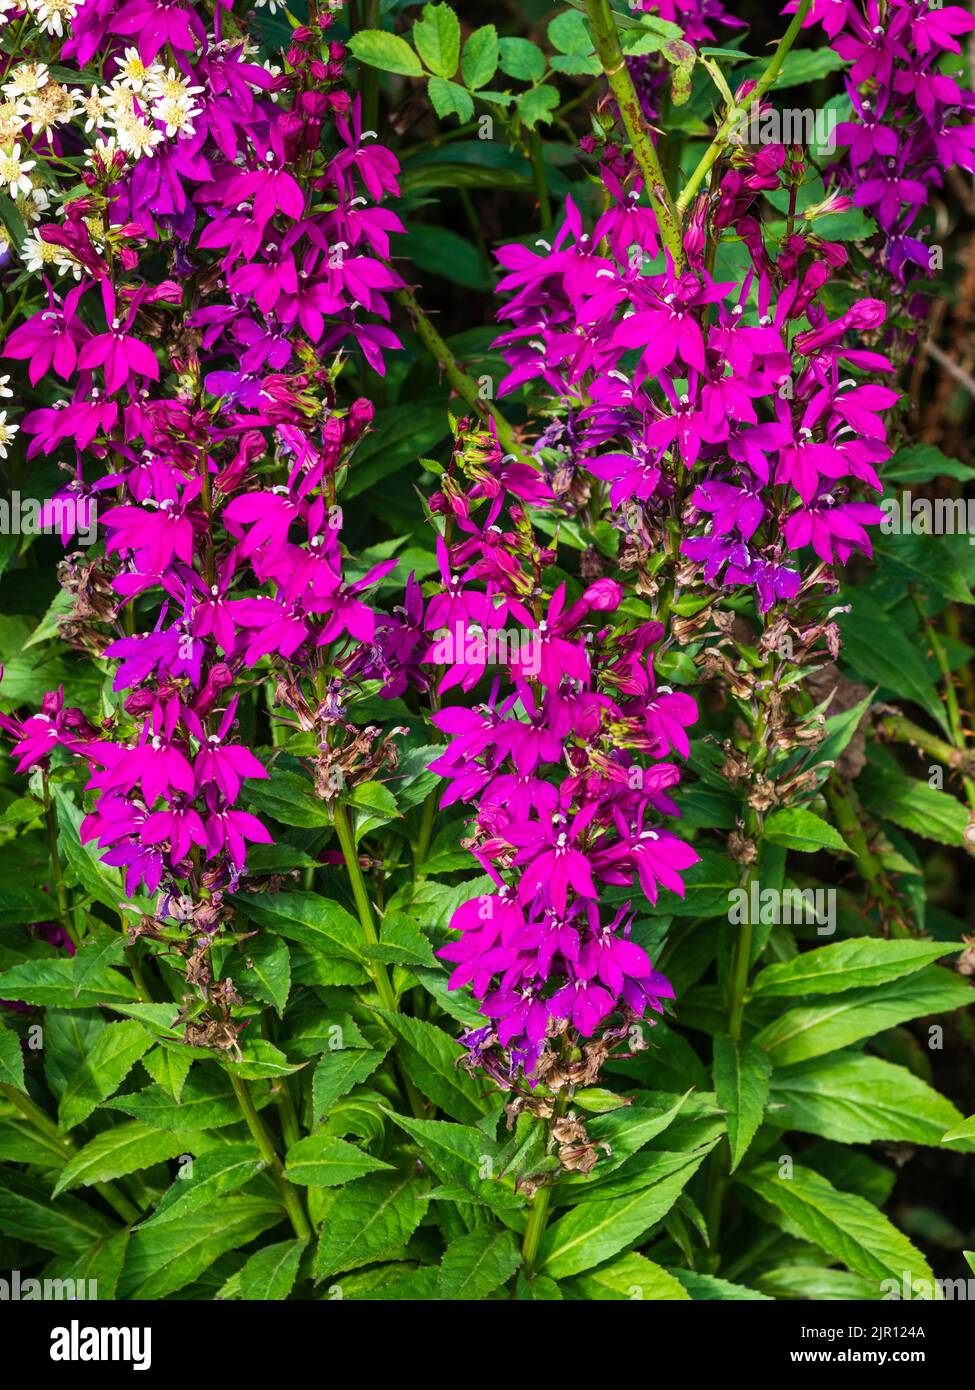 Upright spike of magenta summer flowers of the hardy perennial Lobelia x speciosa 'Tania' Stock Photo